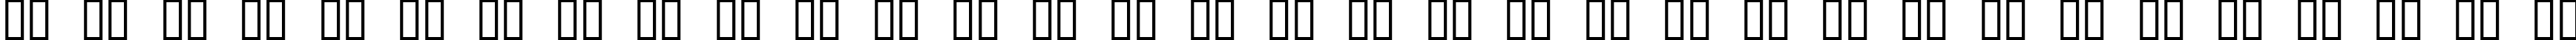 Пример написания русского алфавита шрифтом Omni Girl